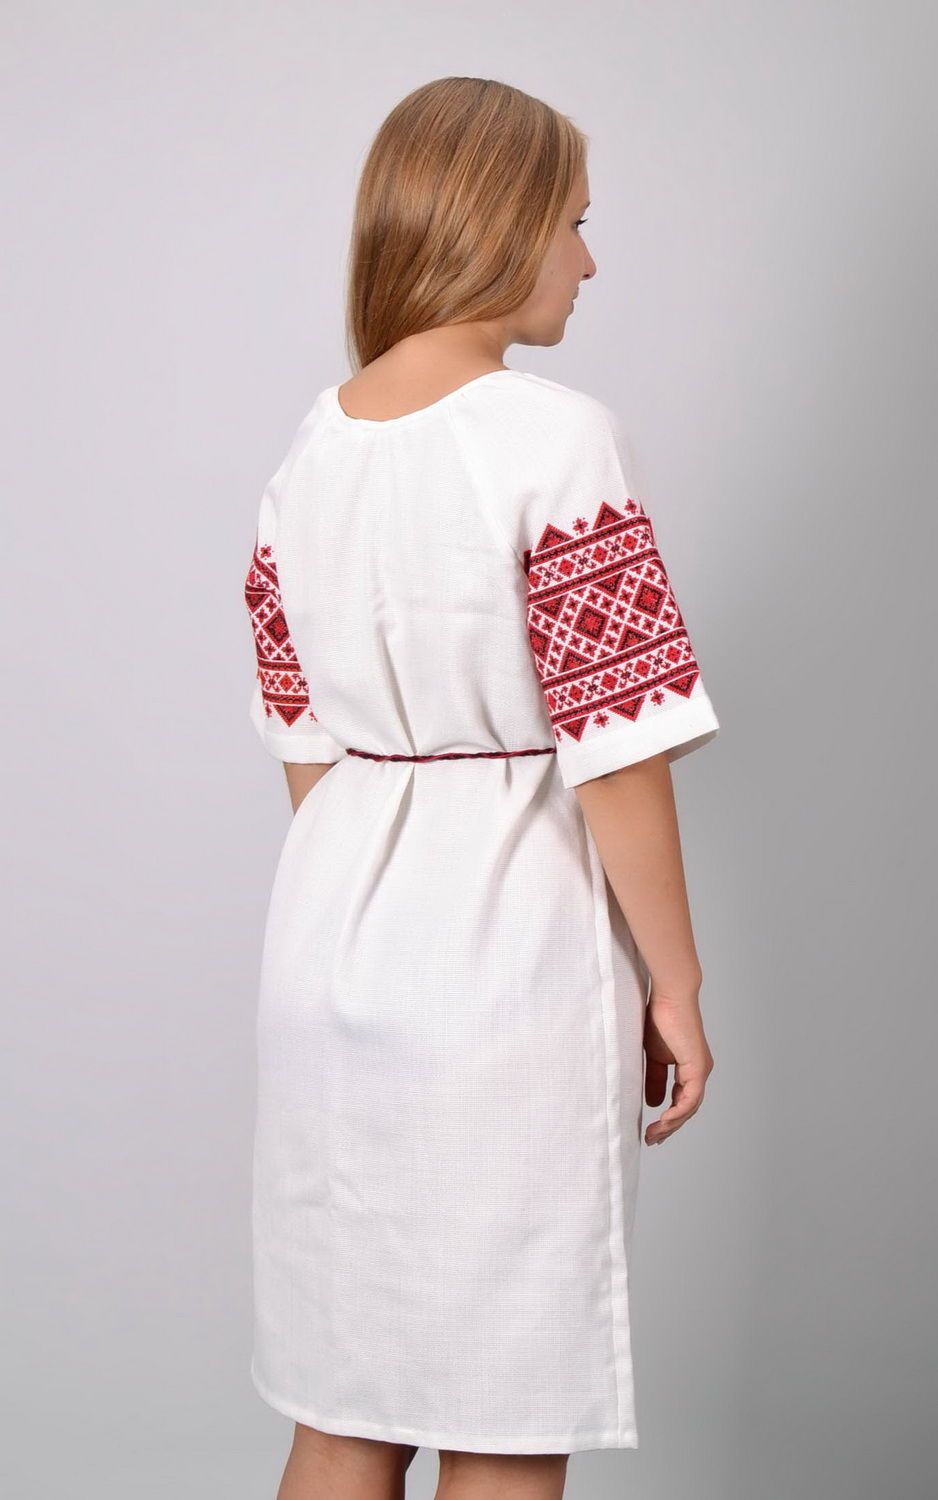 Robe ethnique en coton avec broderie photo 4